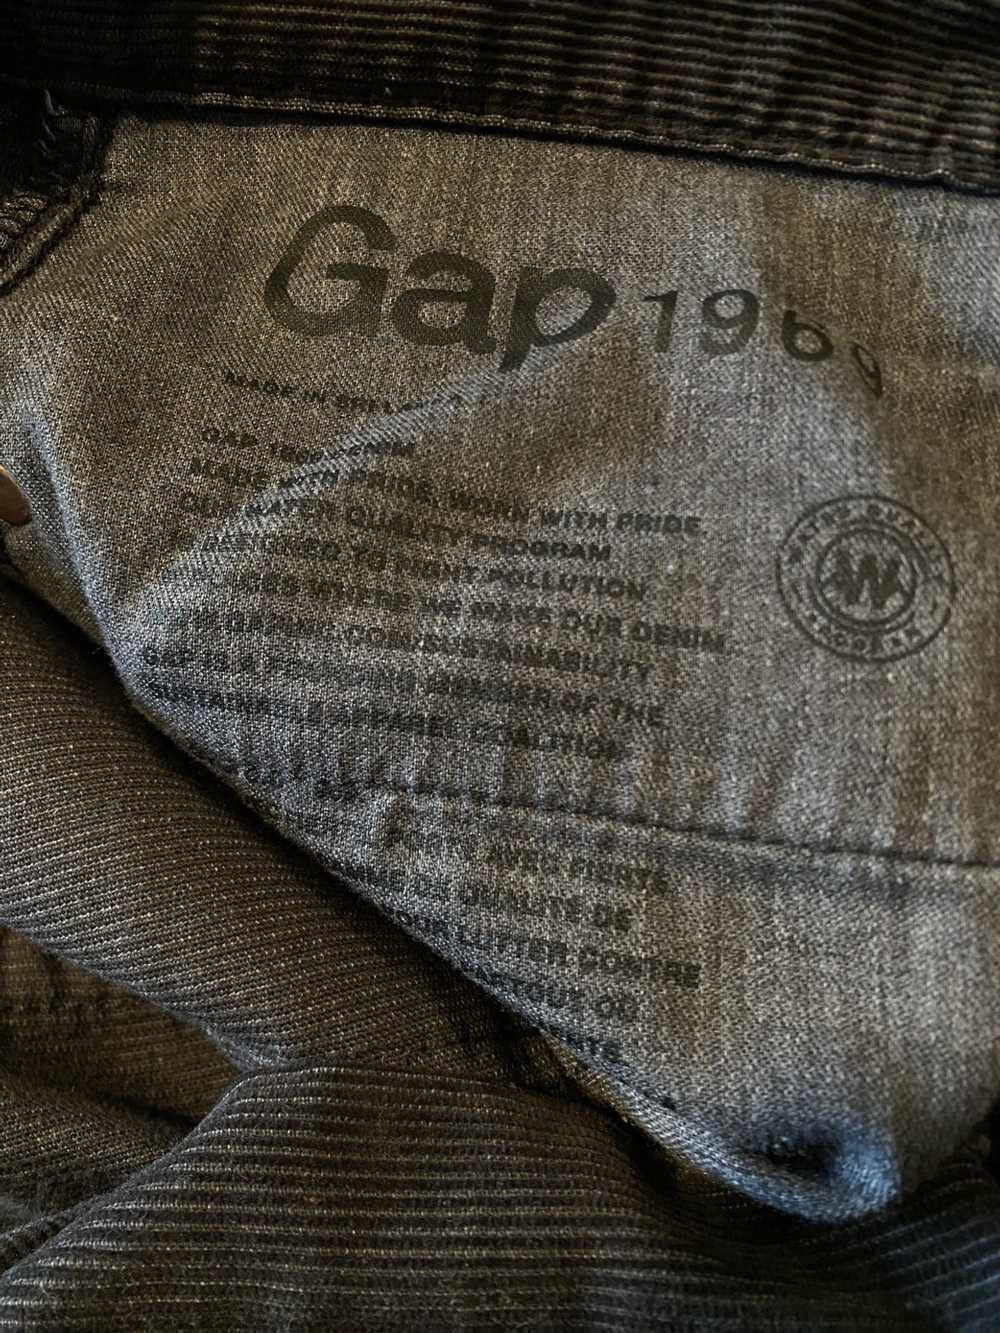 Gap Gap 1969 vintage pants *Barely Worn* - image 4